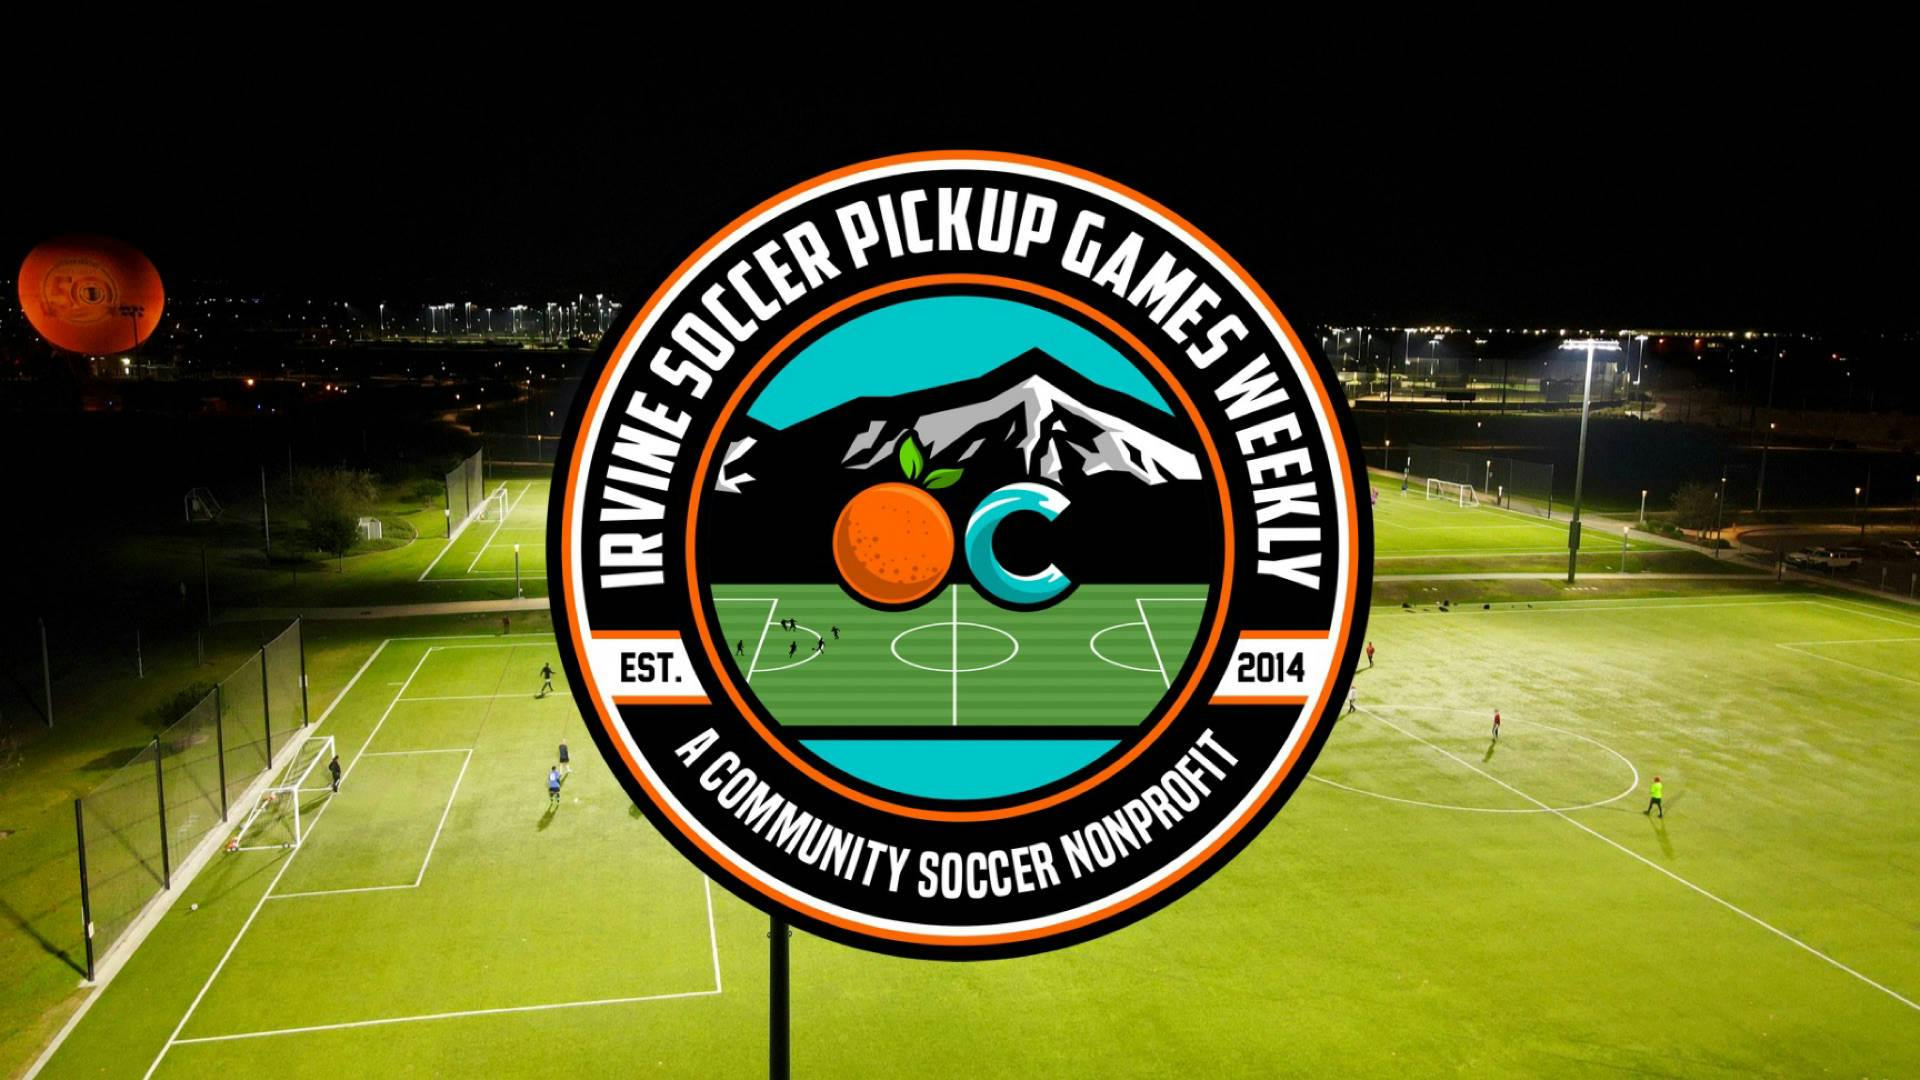 Irvine Soccer PickUp Games Weekly